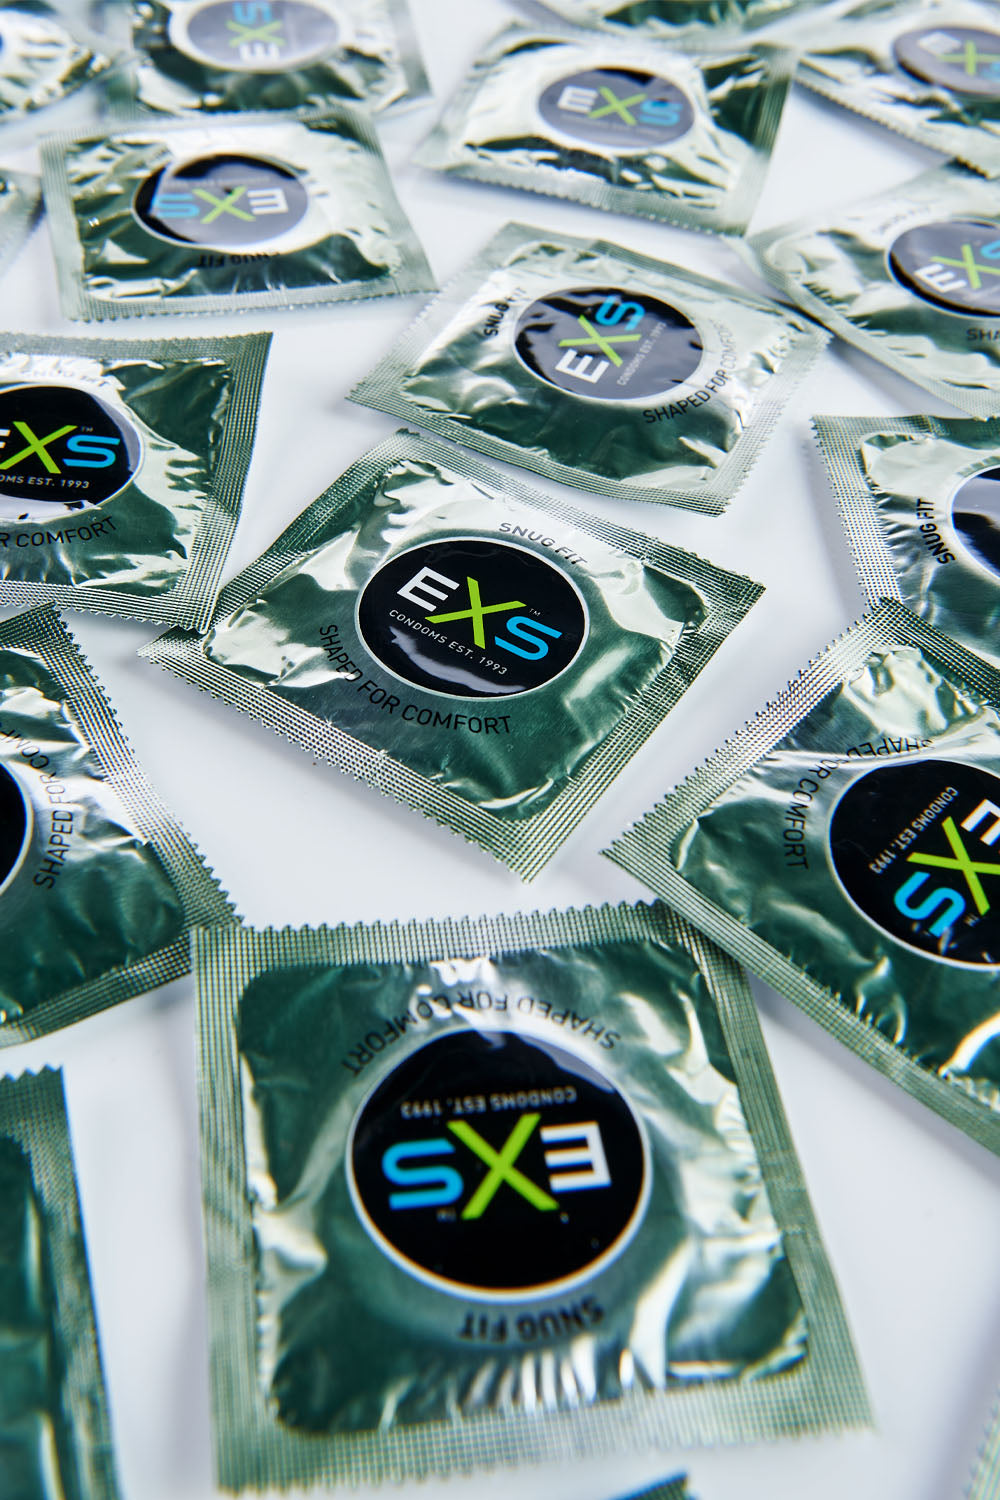 EXS Snug Fit Condoms 12 Pack